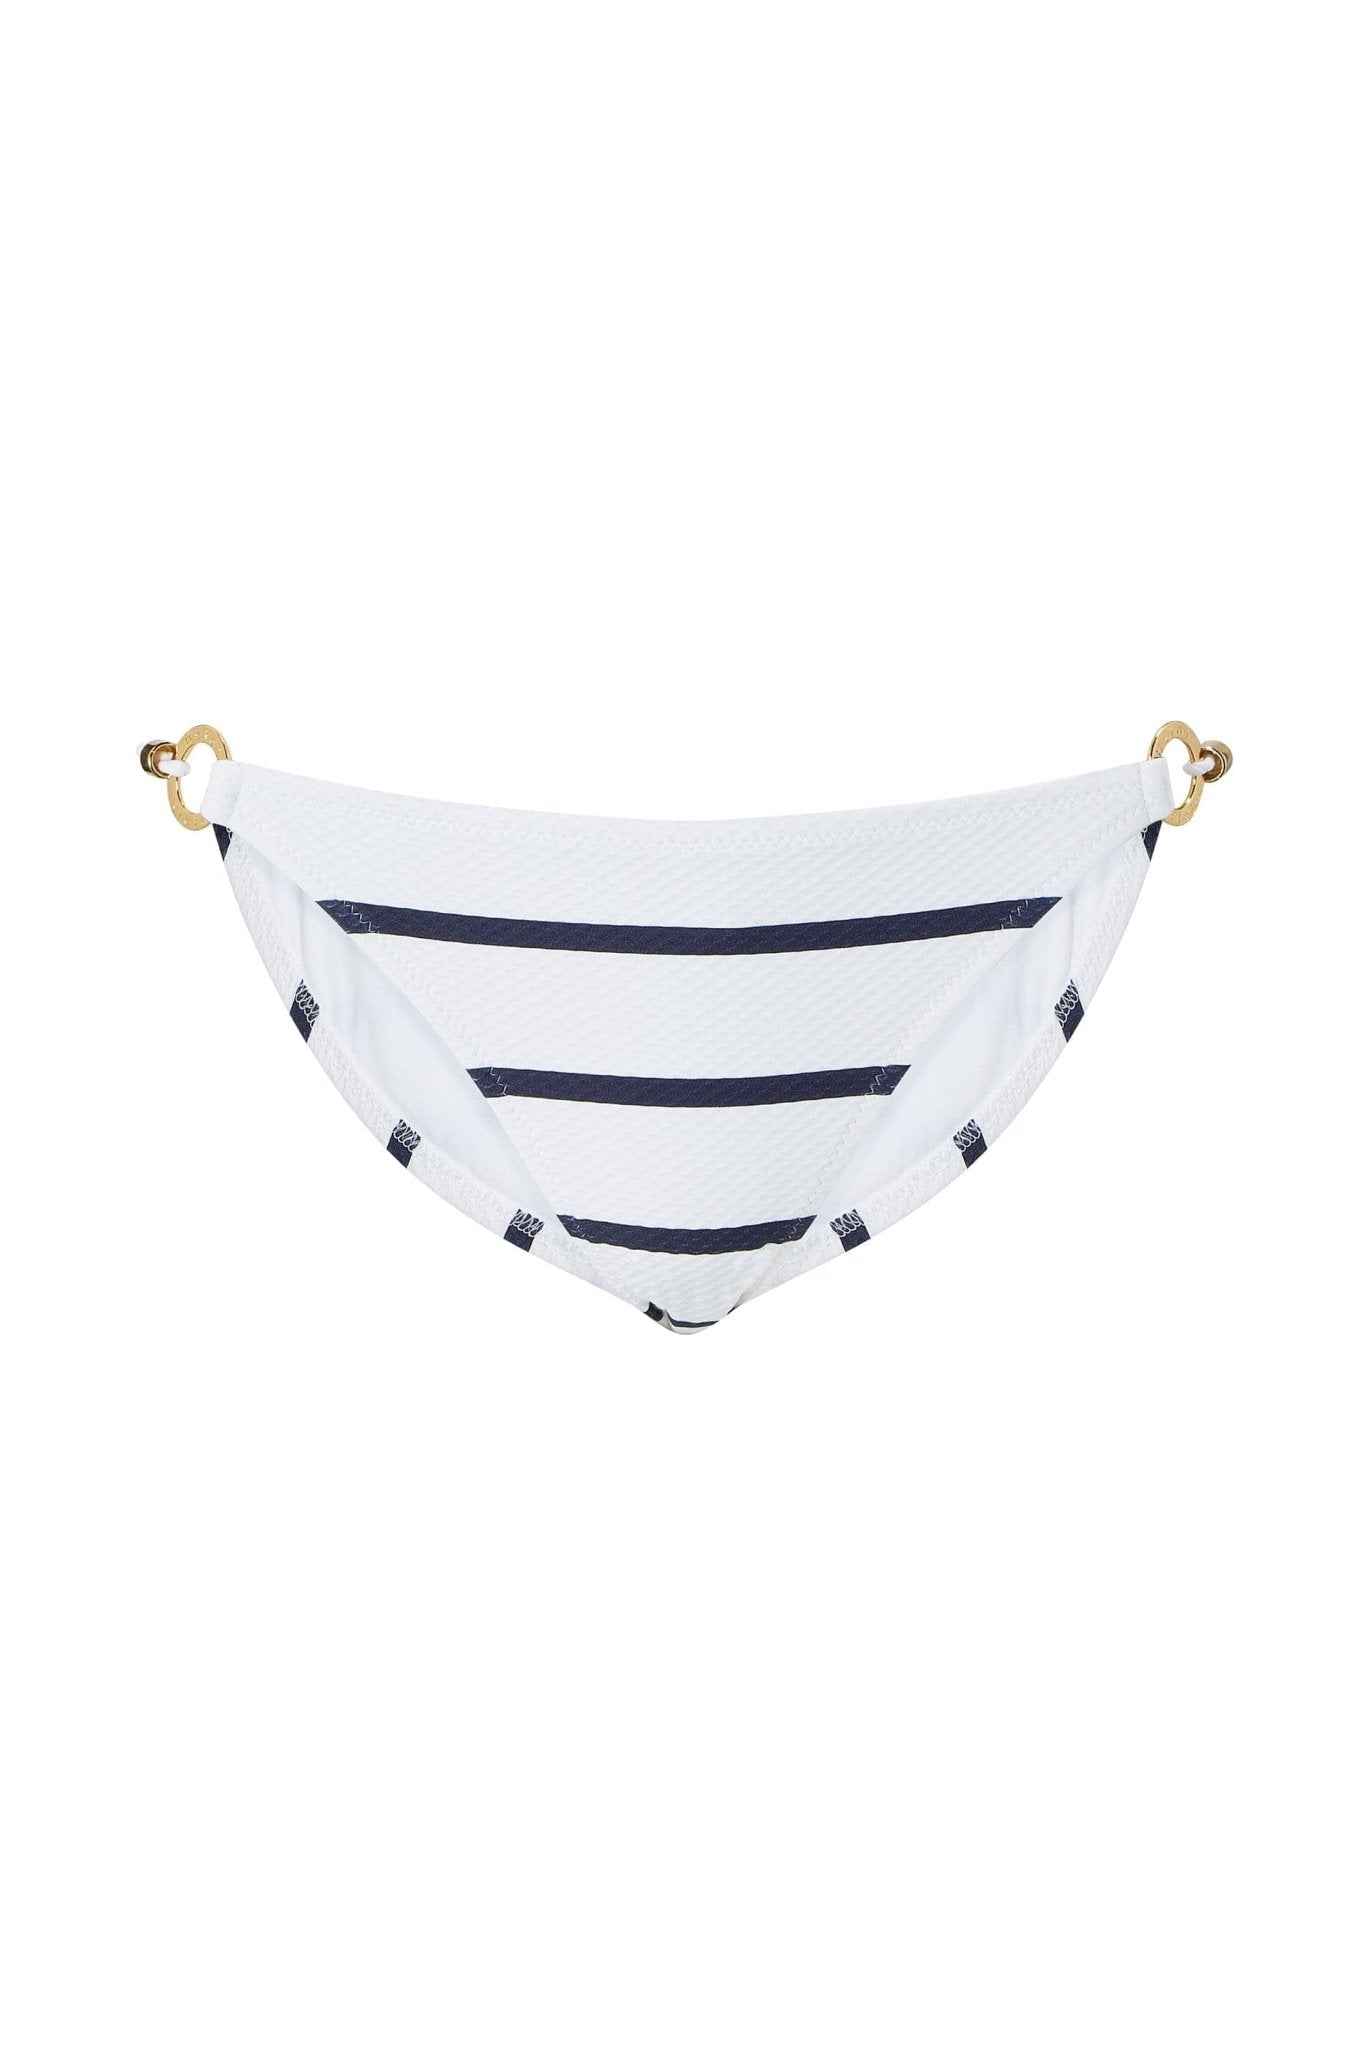 Core Ring Triangle Bikini Bottom in Nautical Stripe - Heidi Klein - UK Store